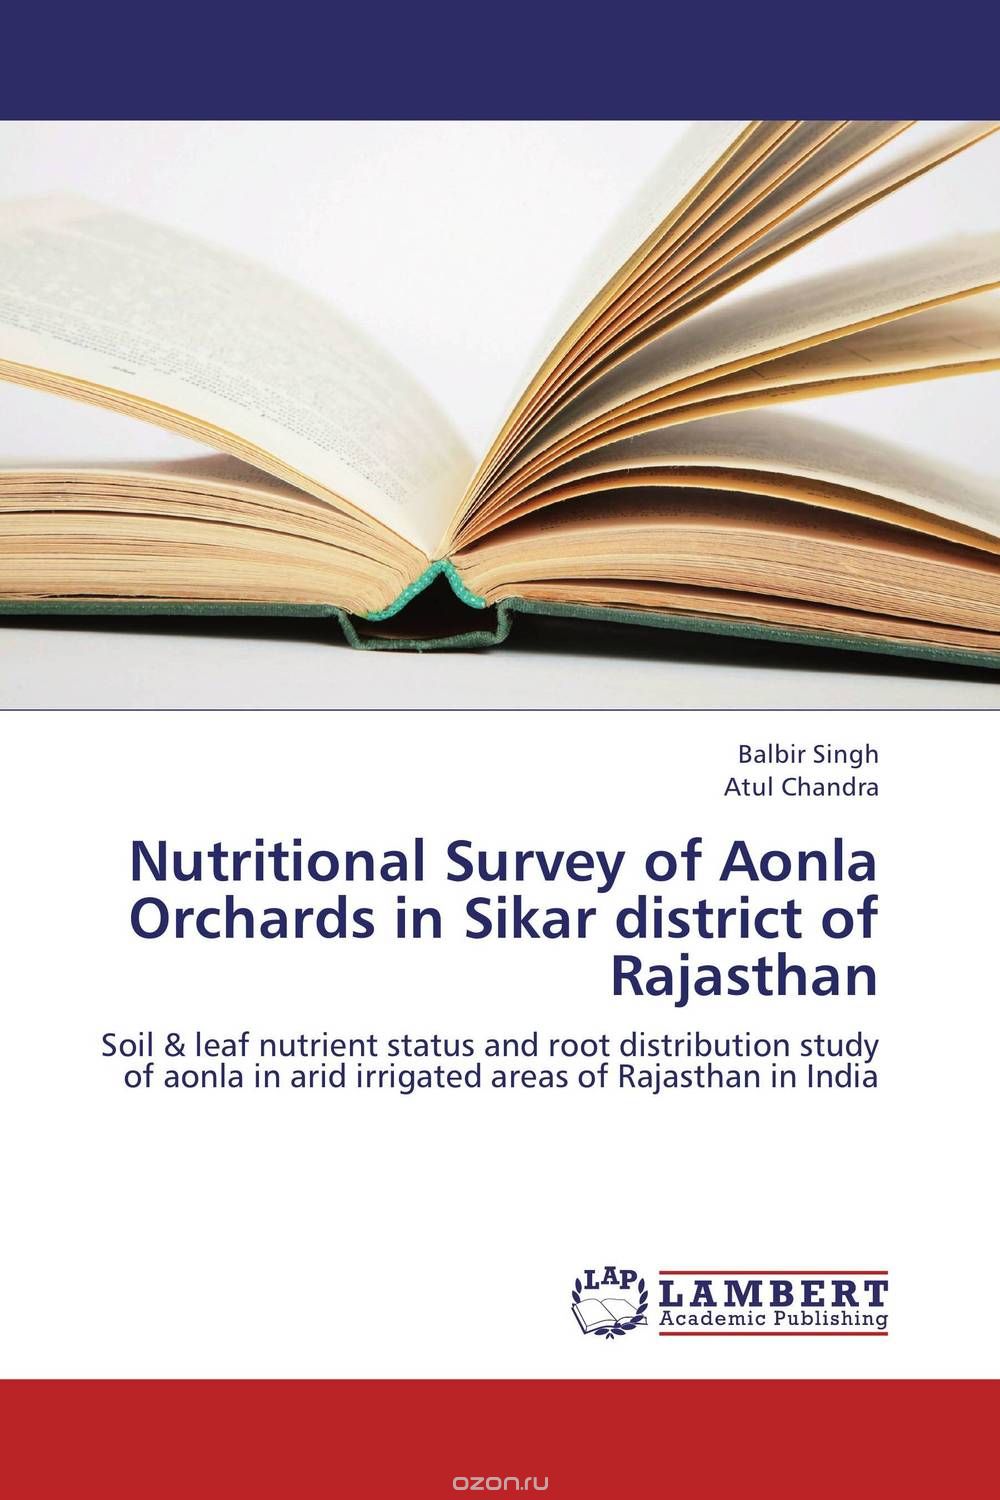 Скачать книгу "Nutritional Survey of Aonla Orchards in Sikar district of Rajasthan"